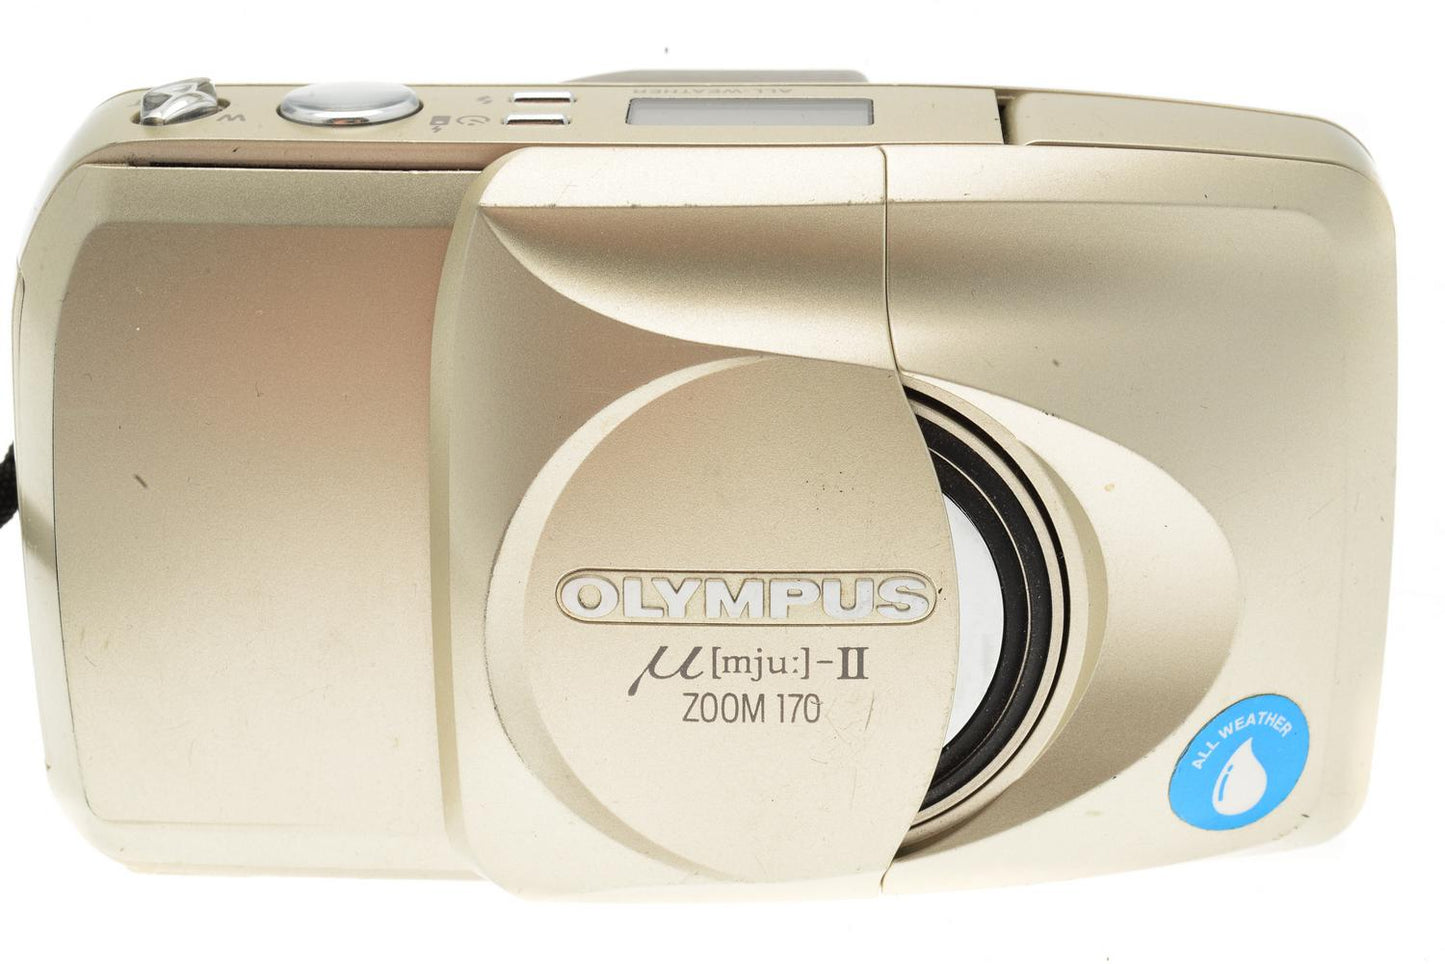 Olympus Mju-II Zoom 170 - Camera